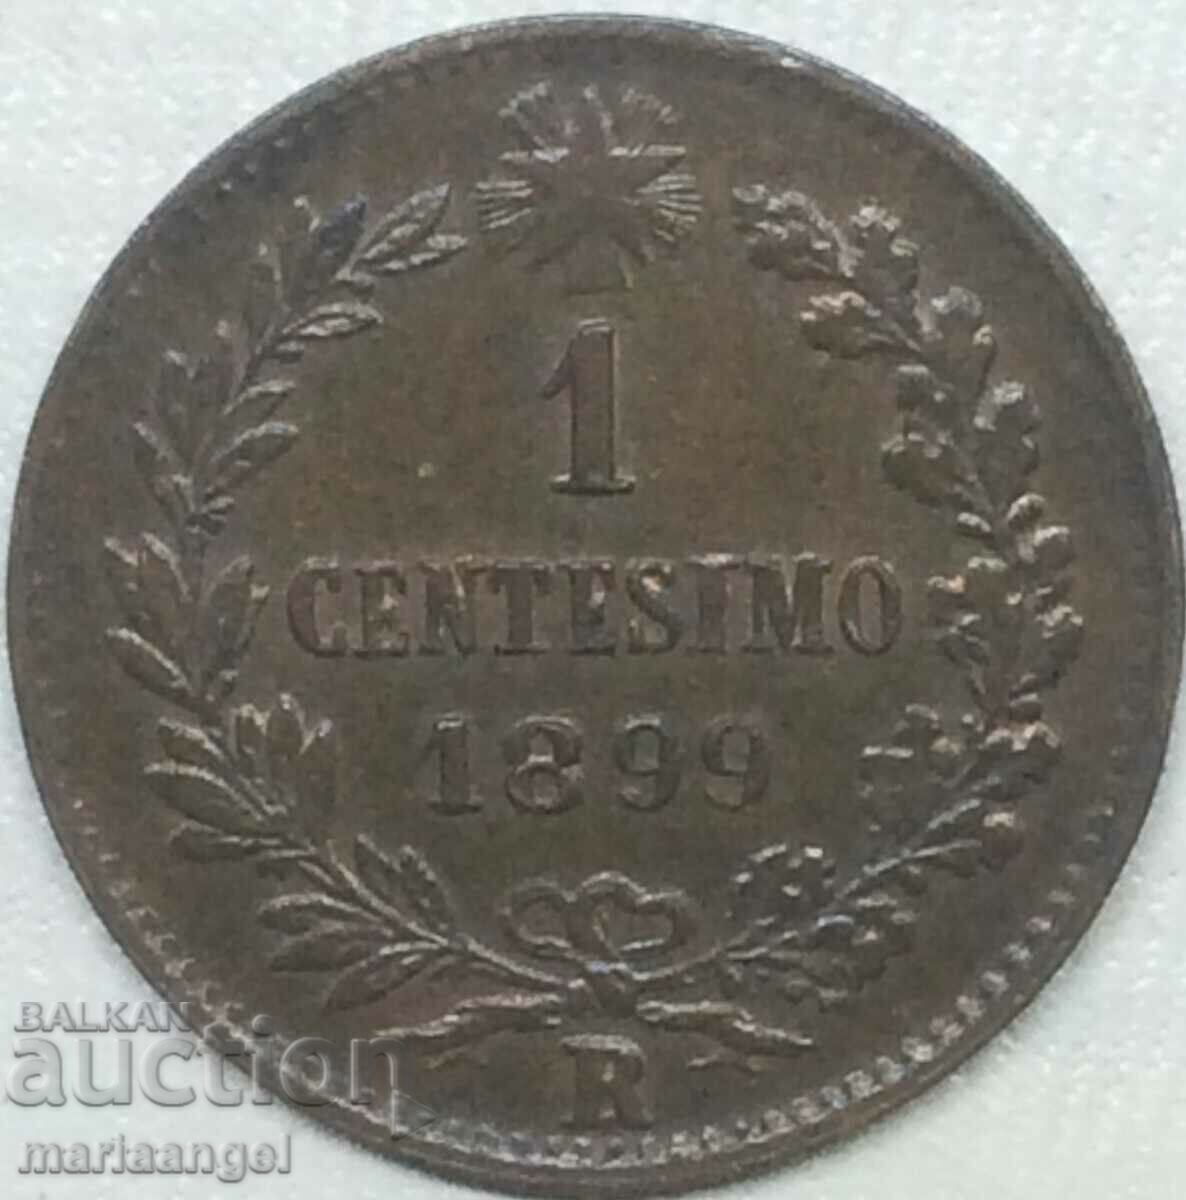 1 centesimo 1899 Italy Umberto I - rare